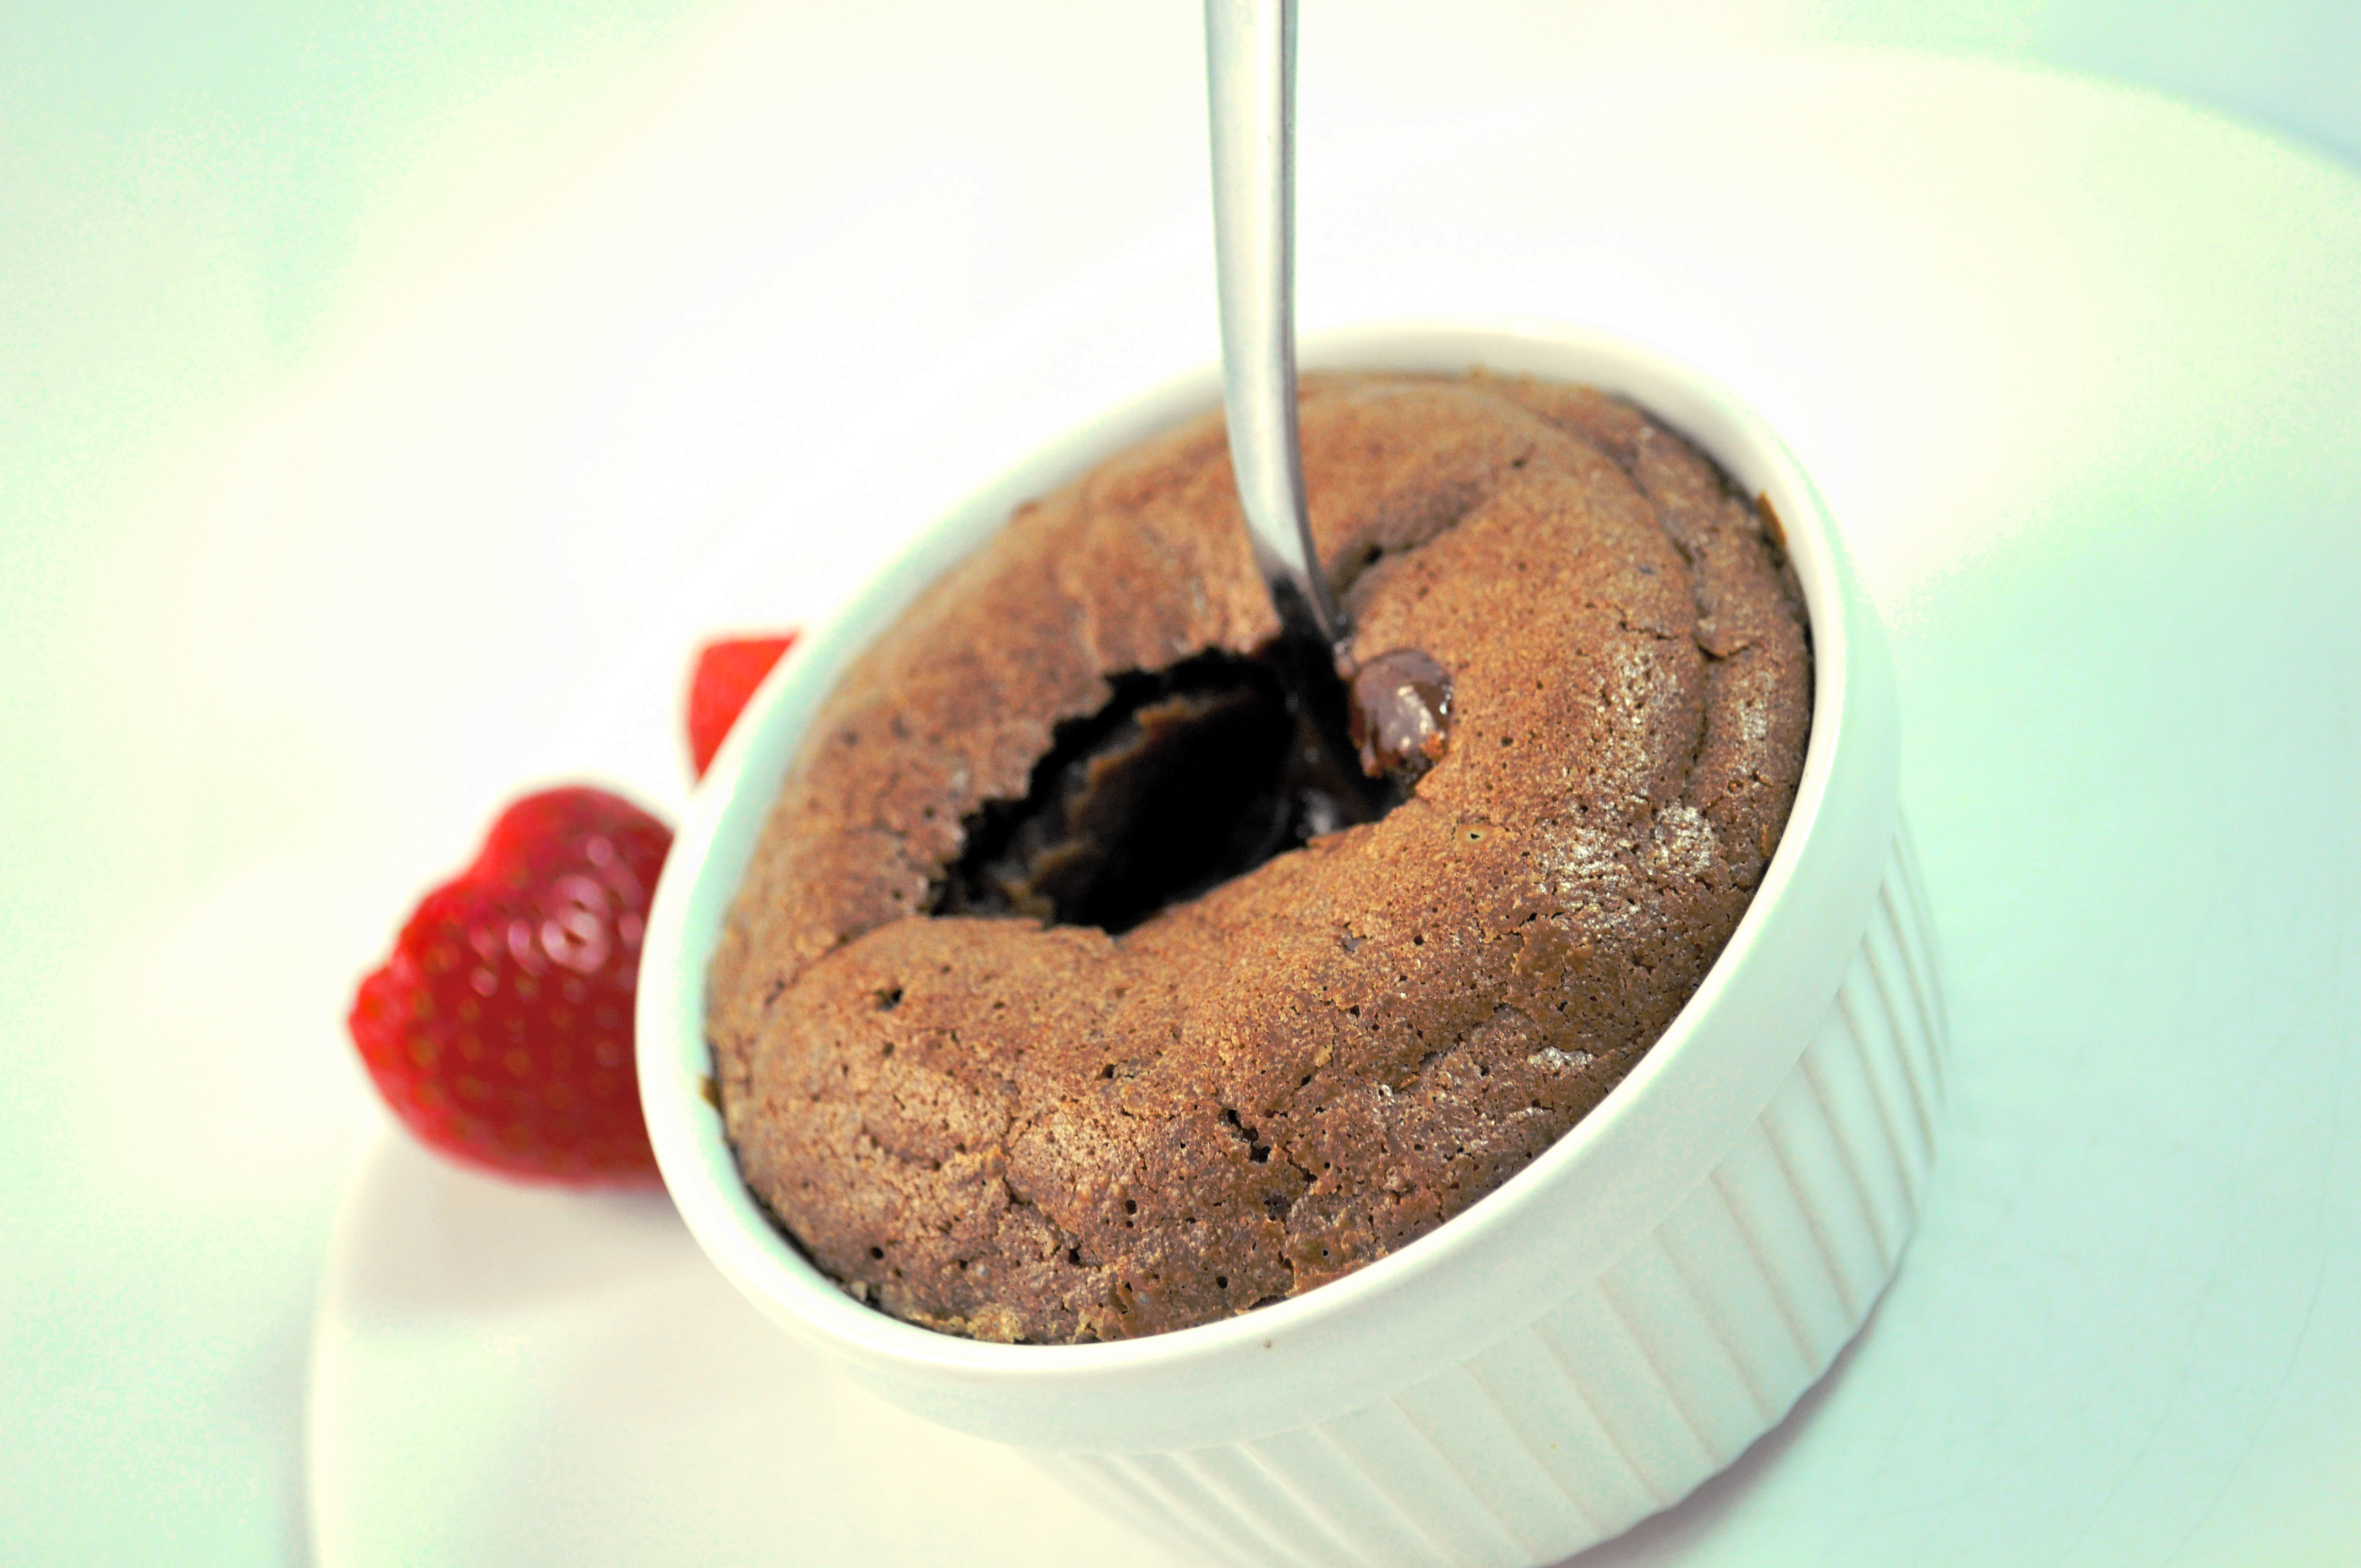 Moelleux au chocolat (chocolate lava cake)